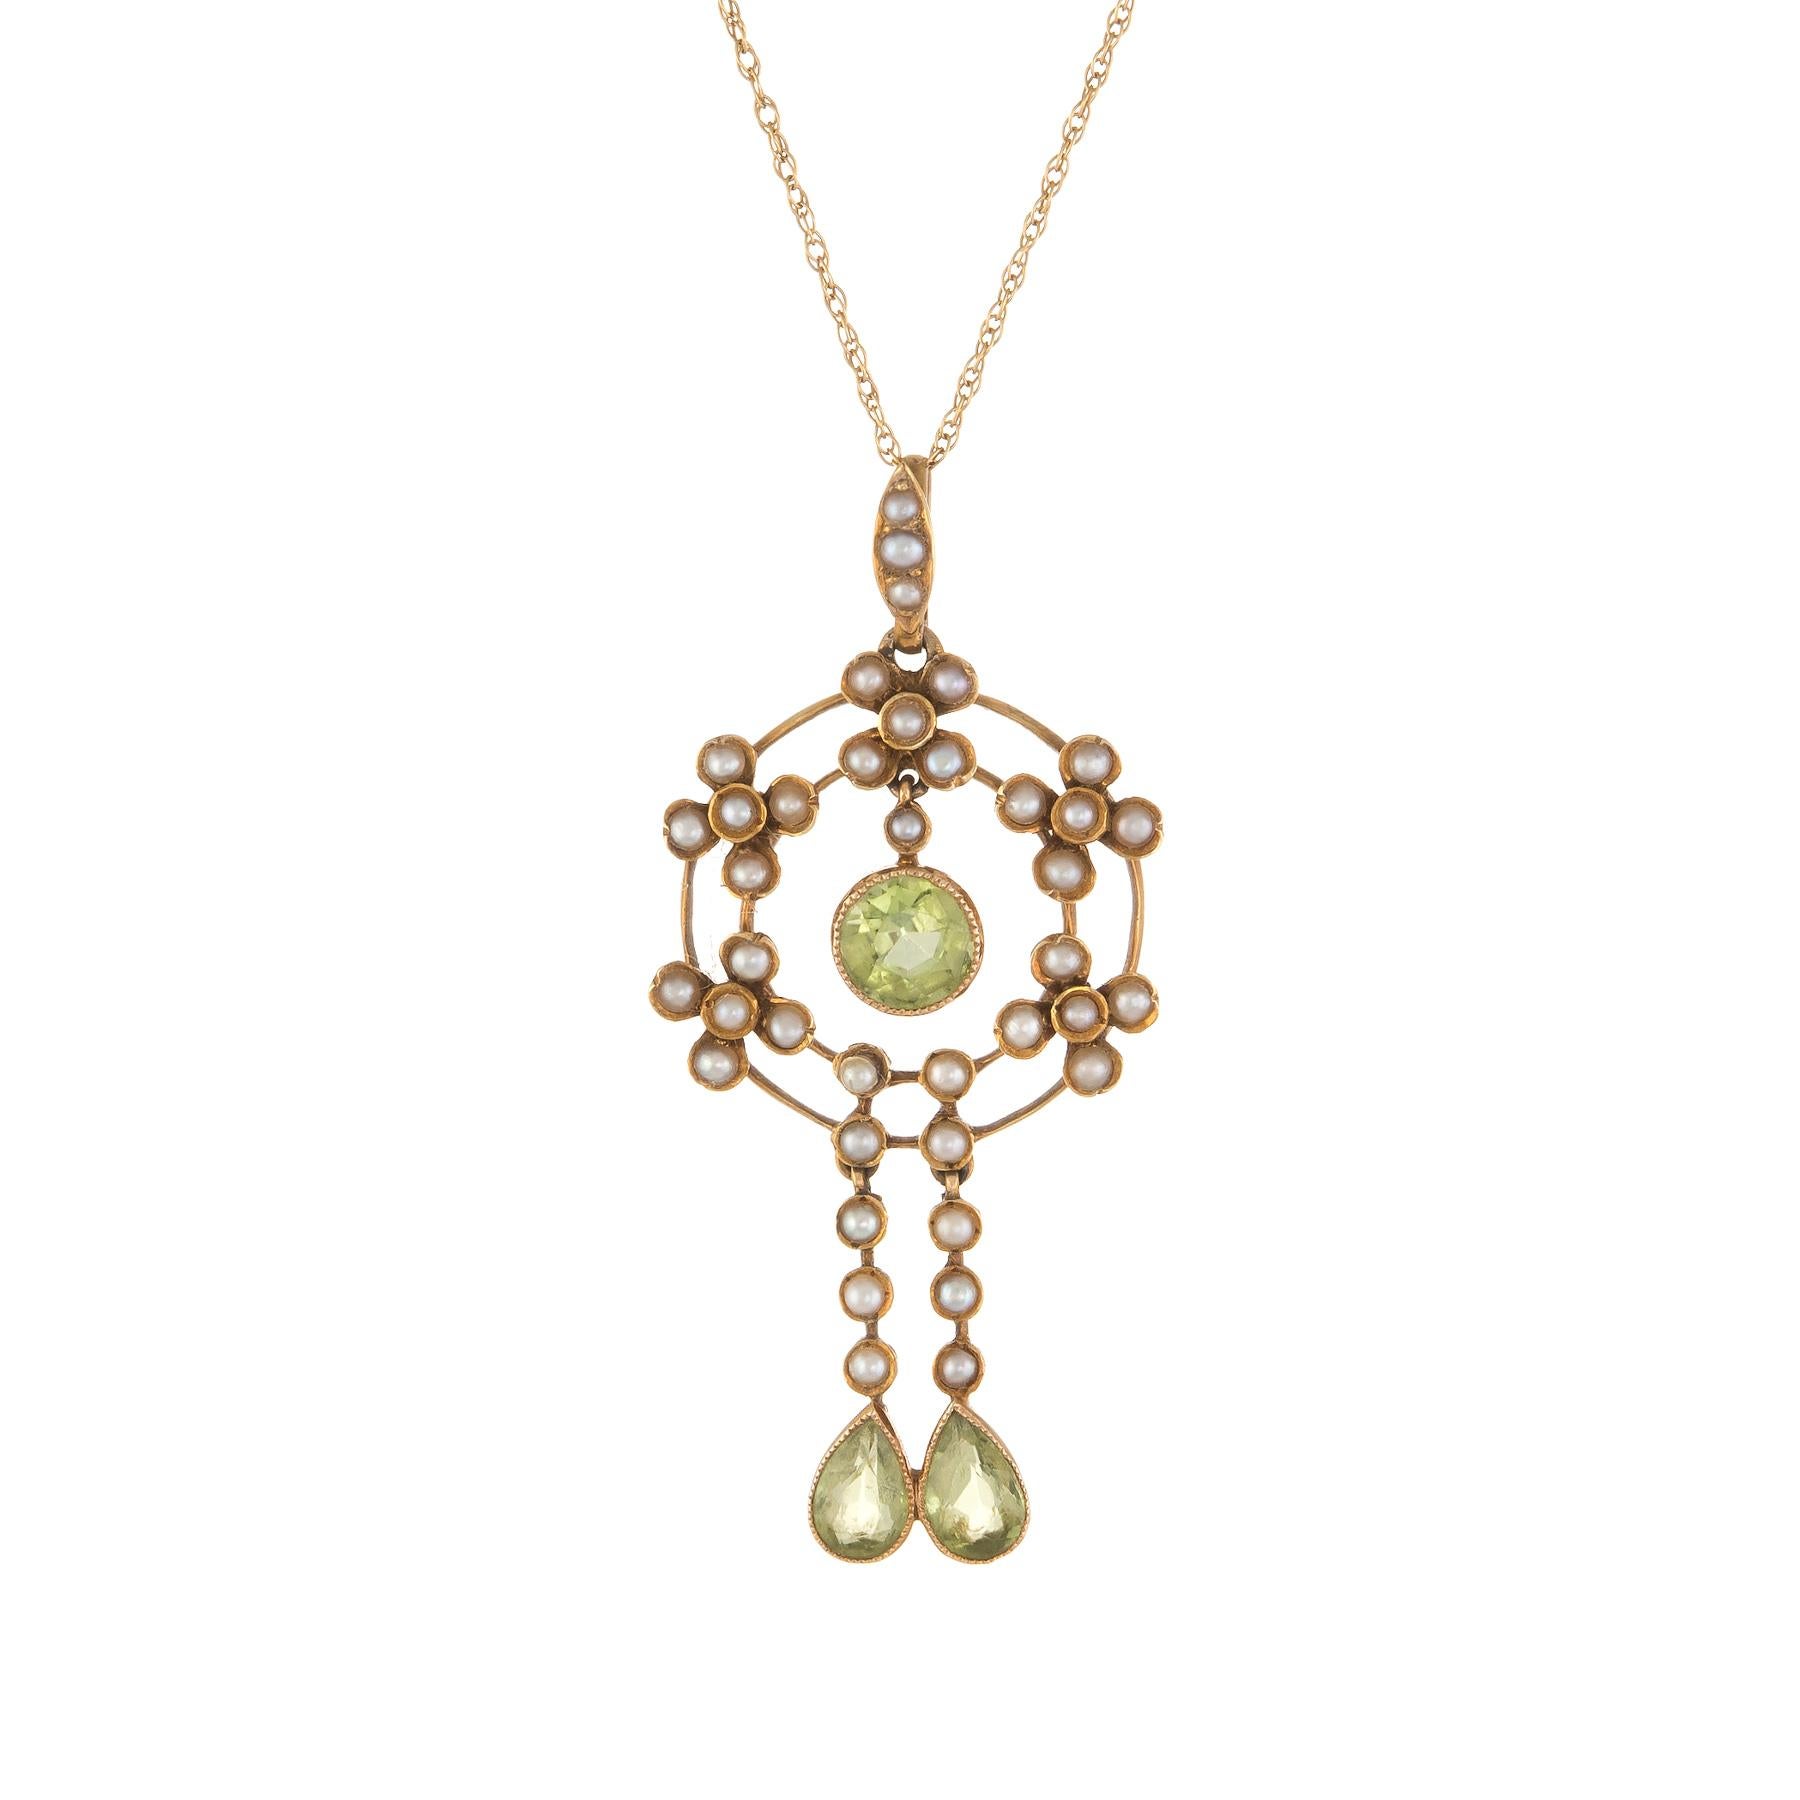 Antique Edwardian Lavaliere Pendant Peridot Seed Pearl Necklace 15 Karat Gold